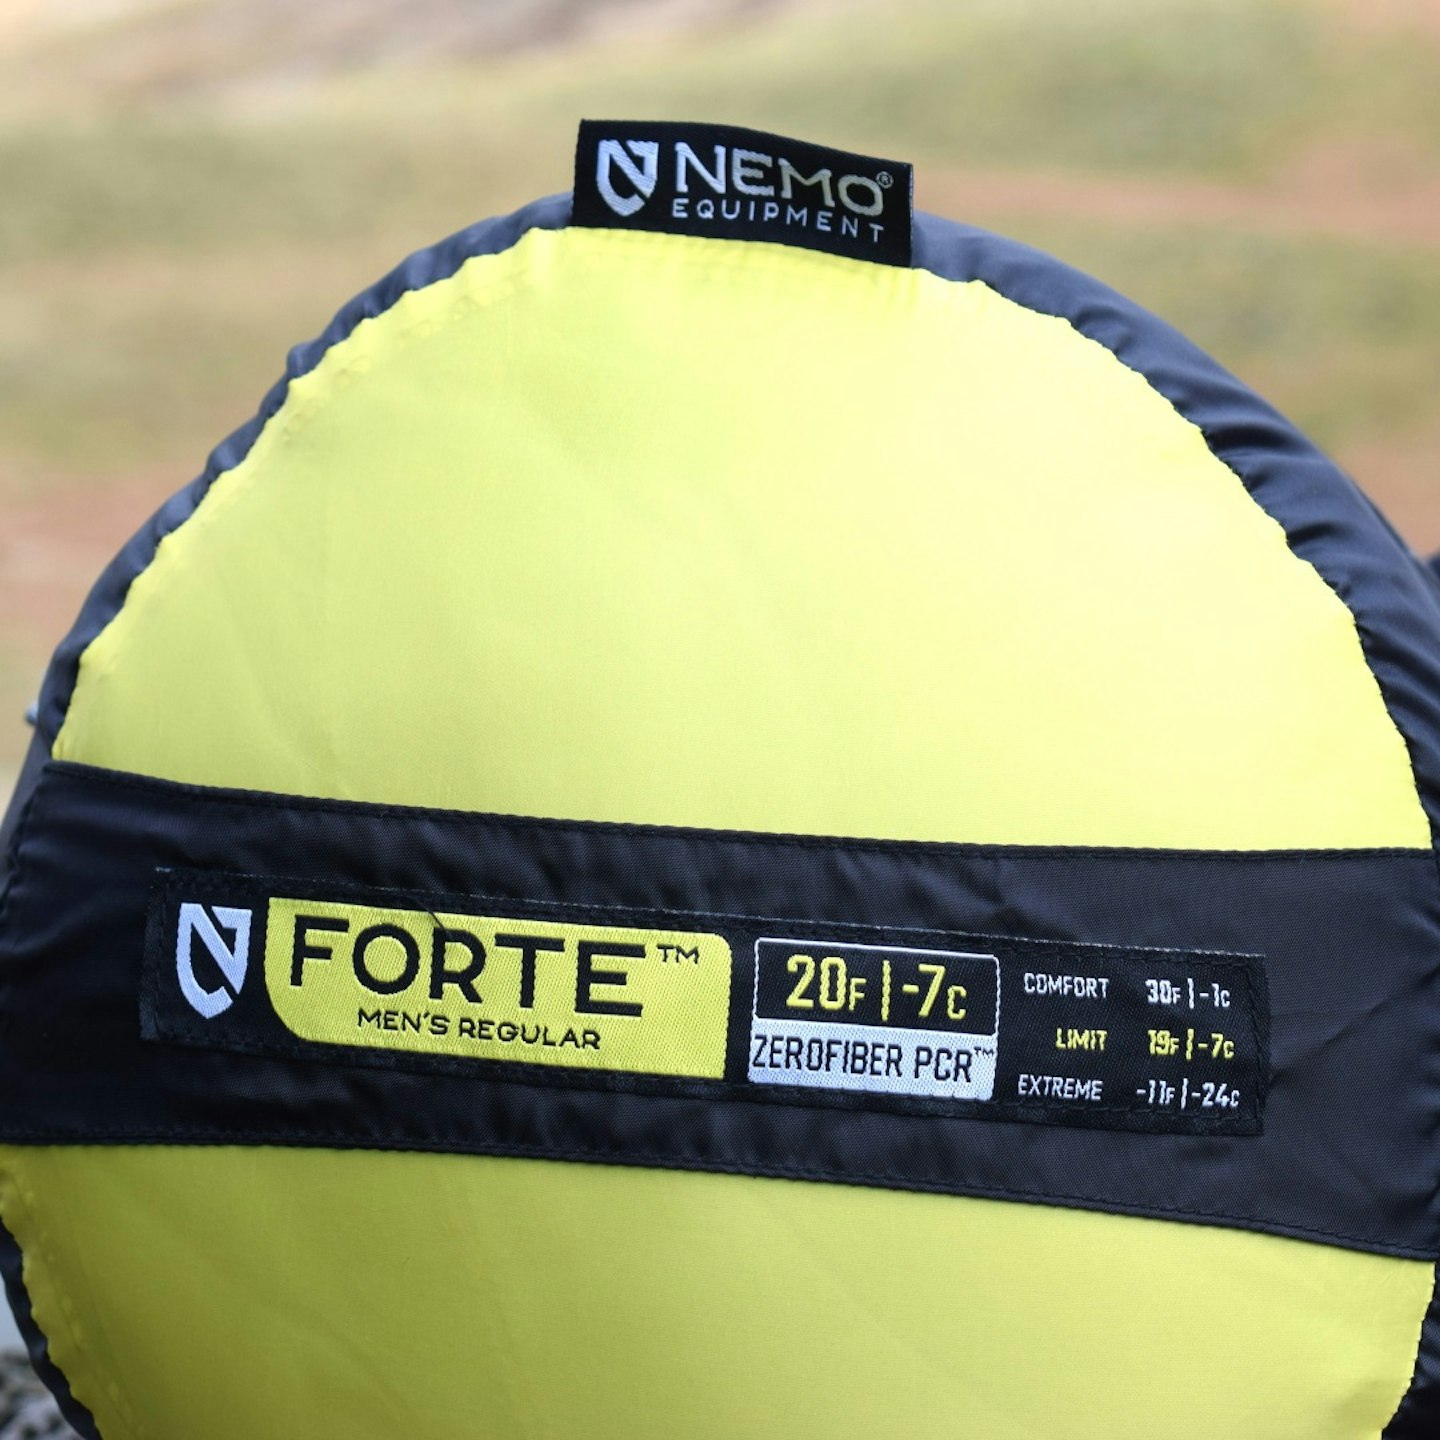 Nemo Forte 20F Endless Promise Synthetic Sleeping Bag stuff sack specs